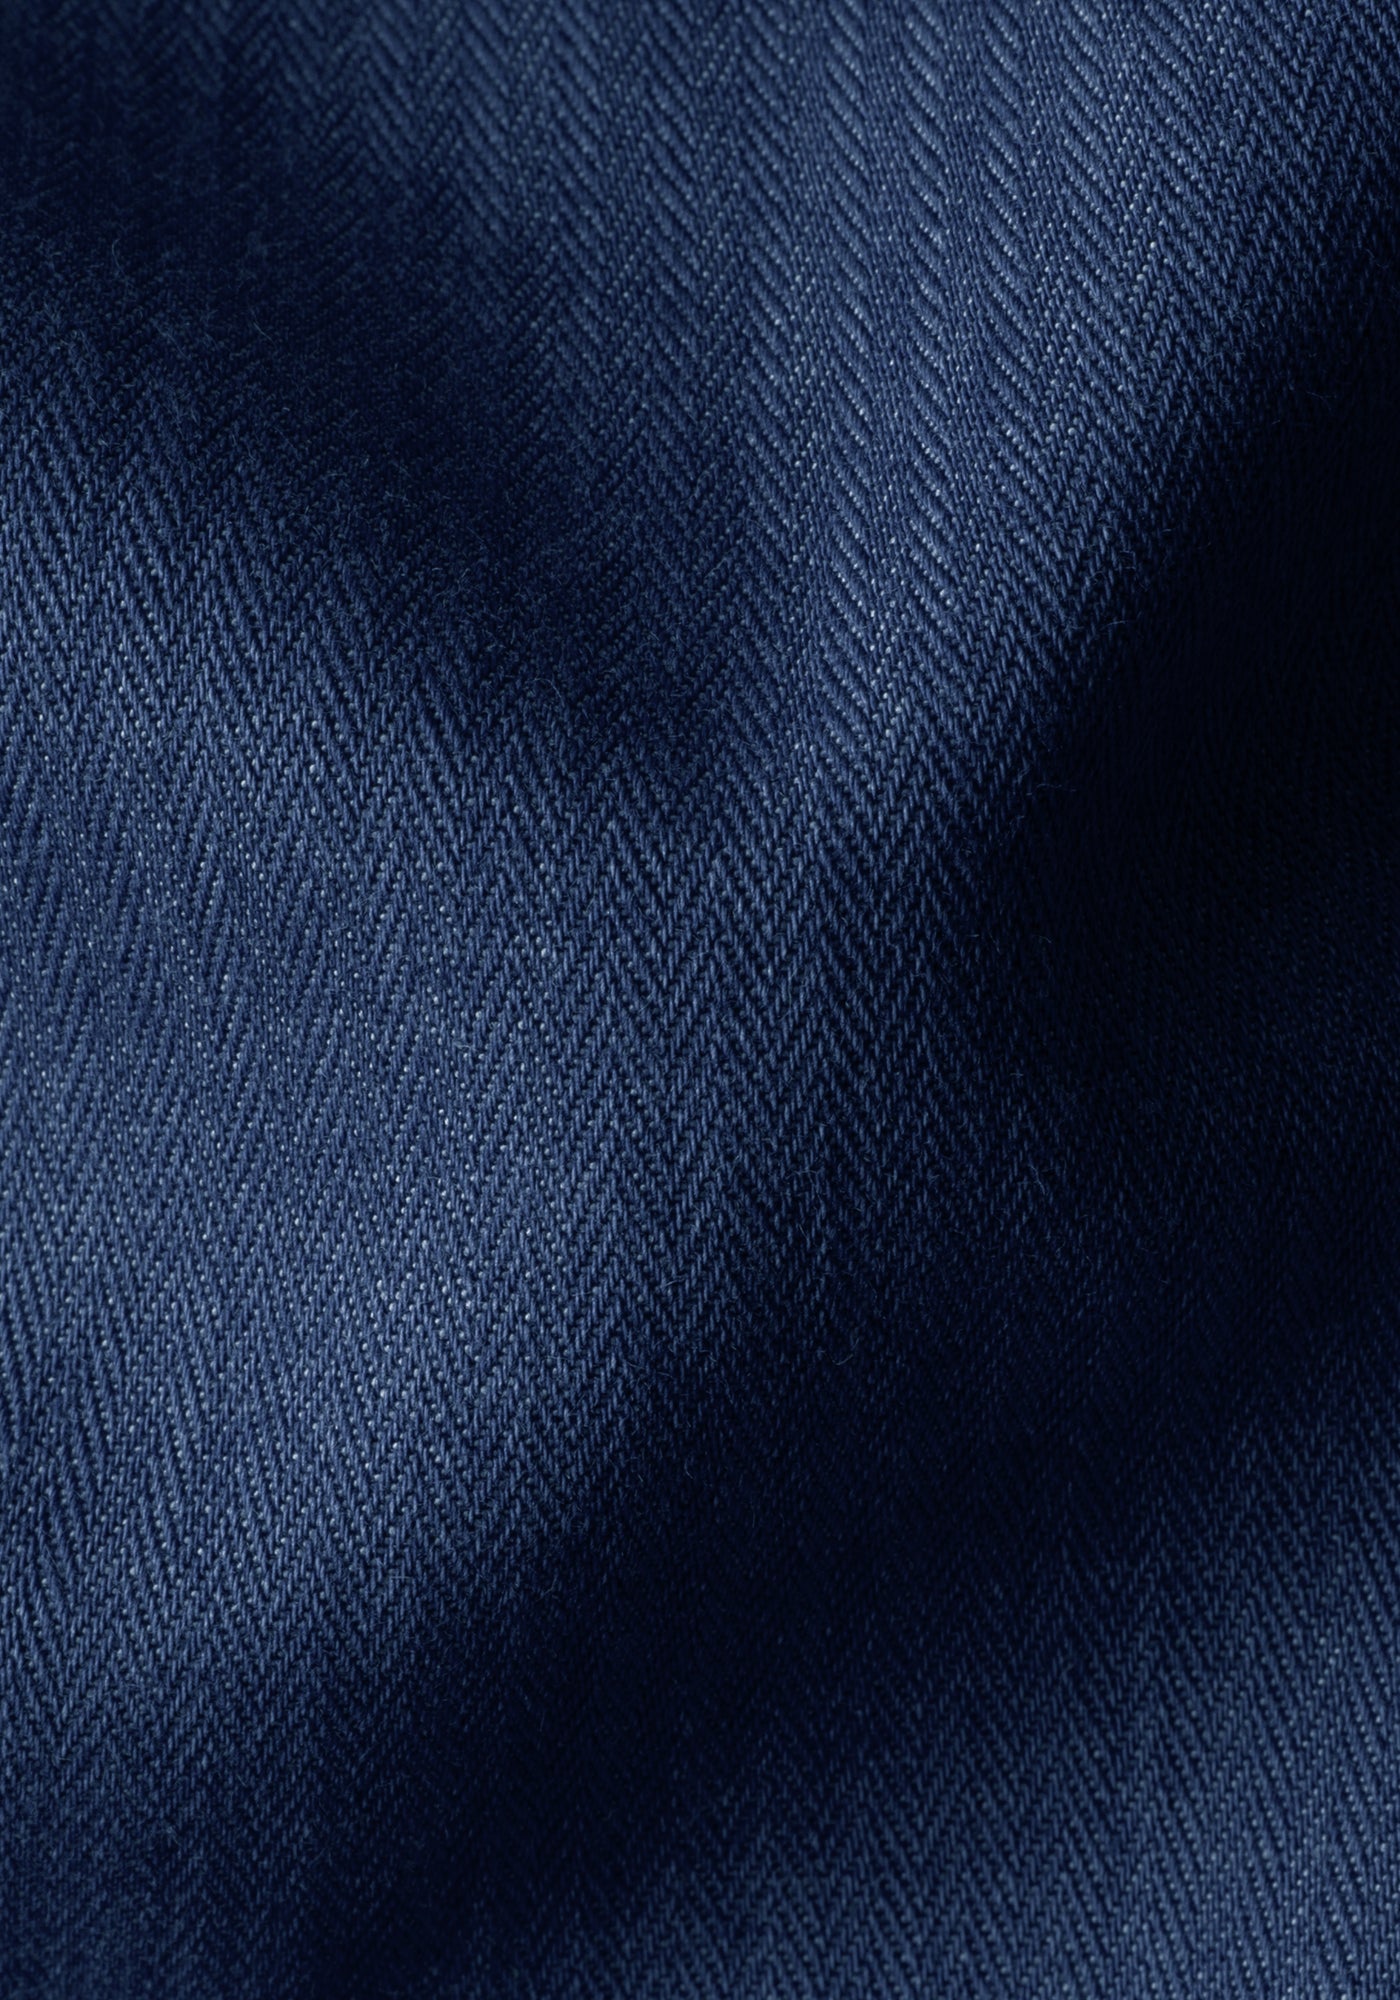 Midnight Blue Washed Herringbone Denim Shirt